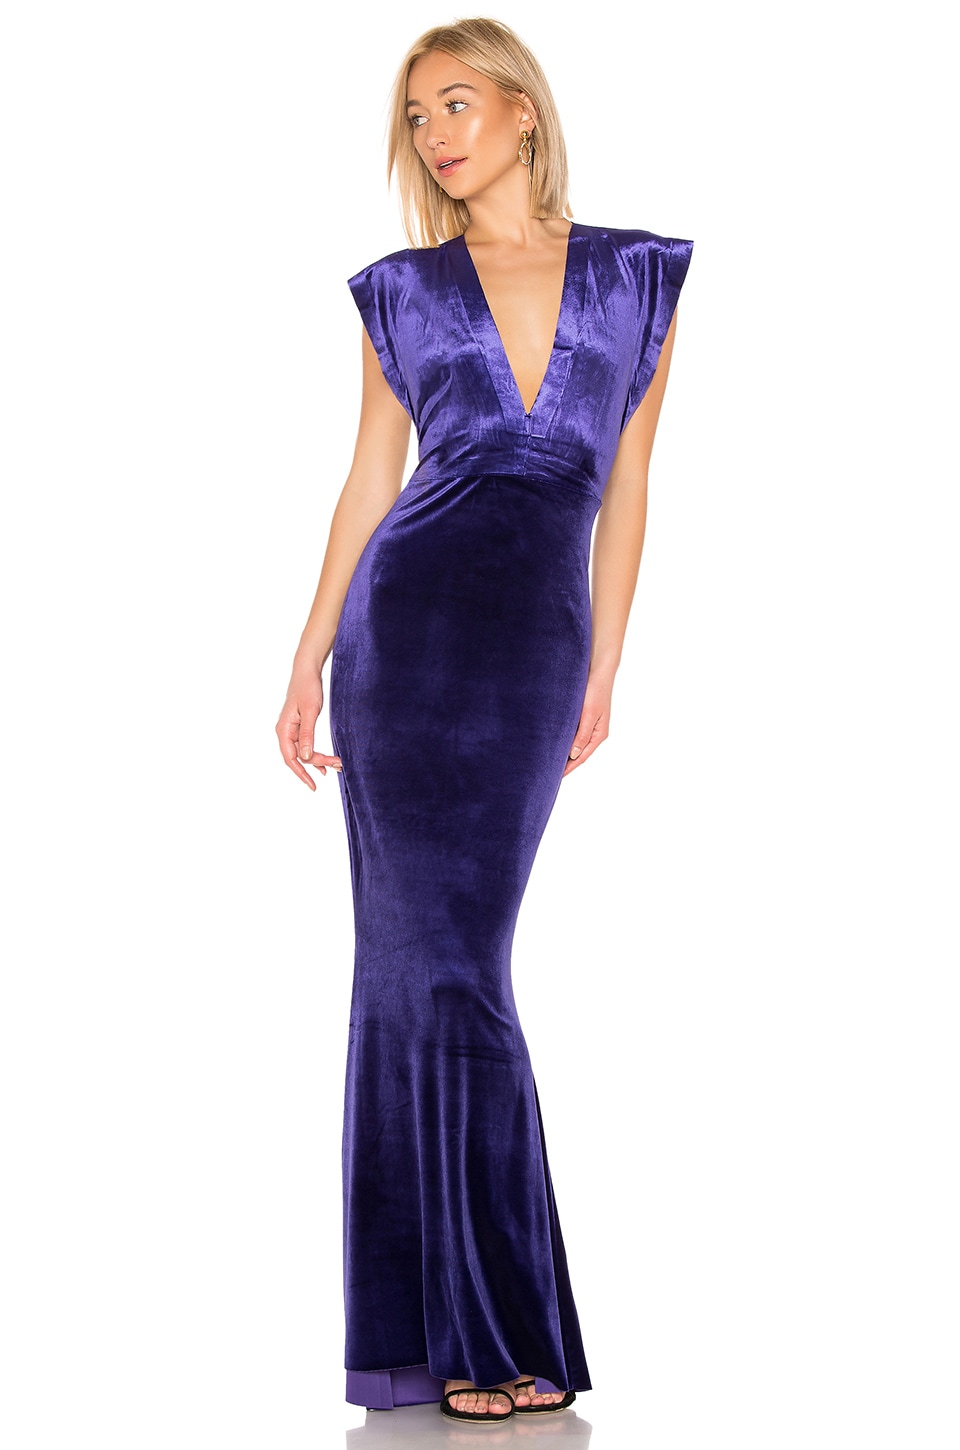 purple silk wrap dress